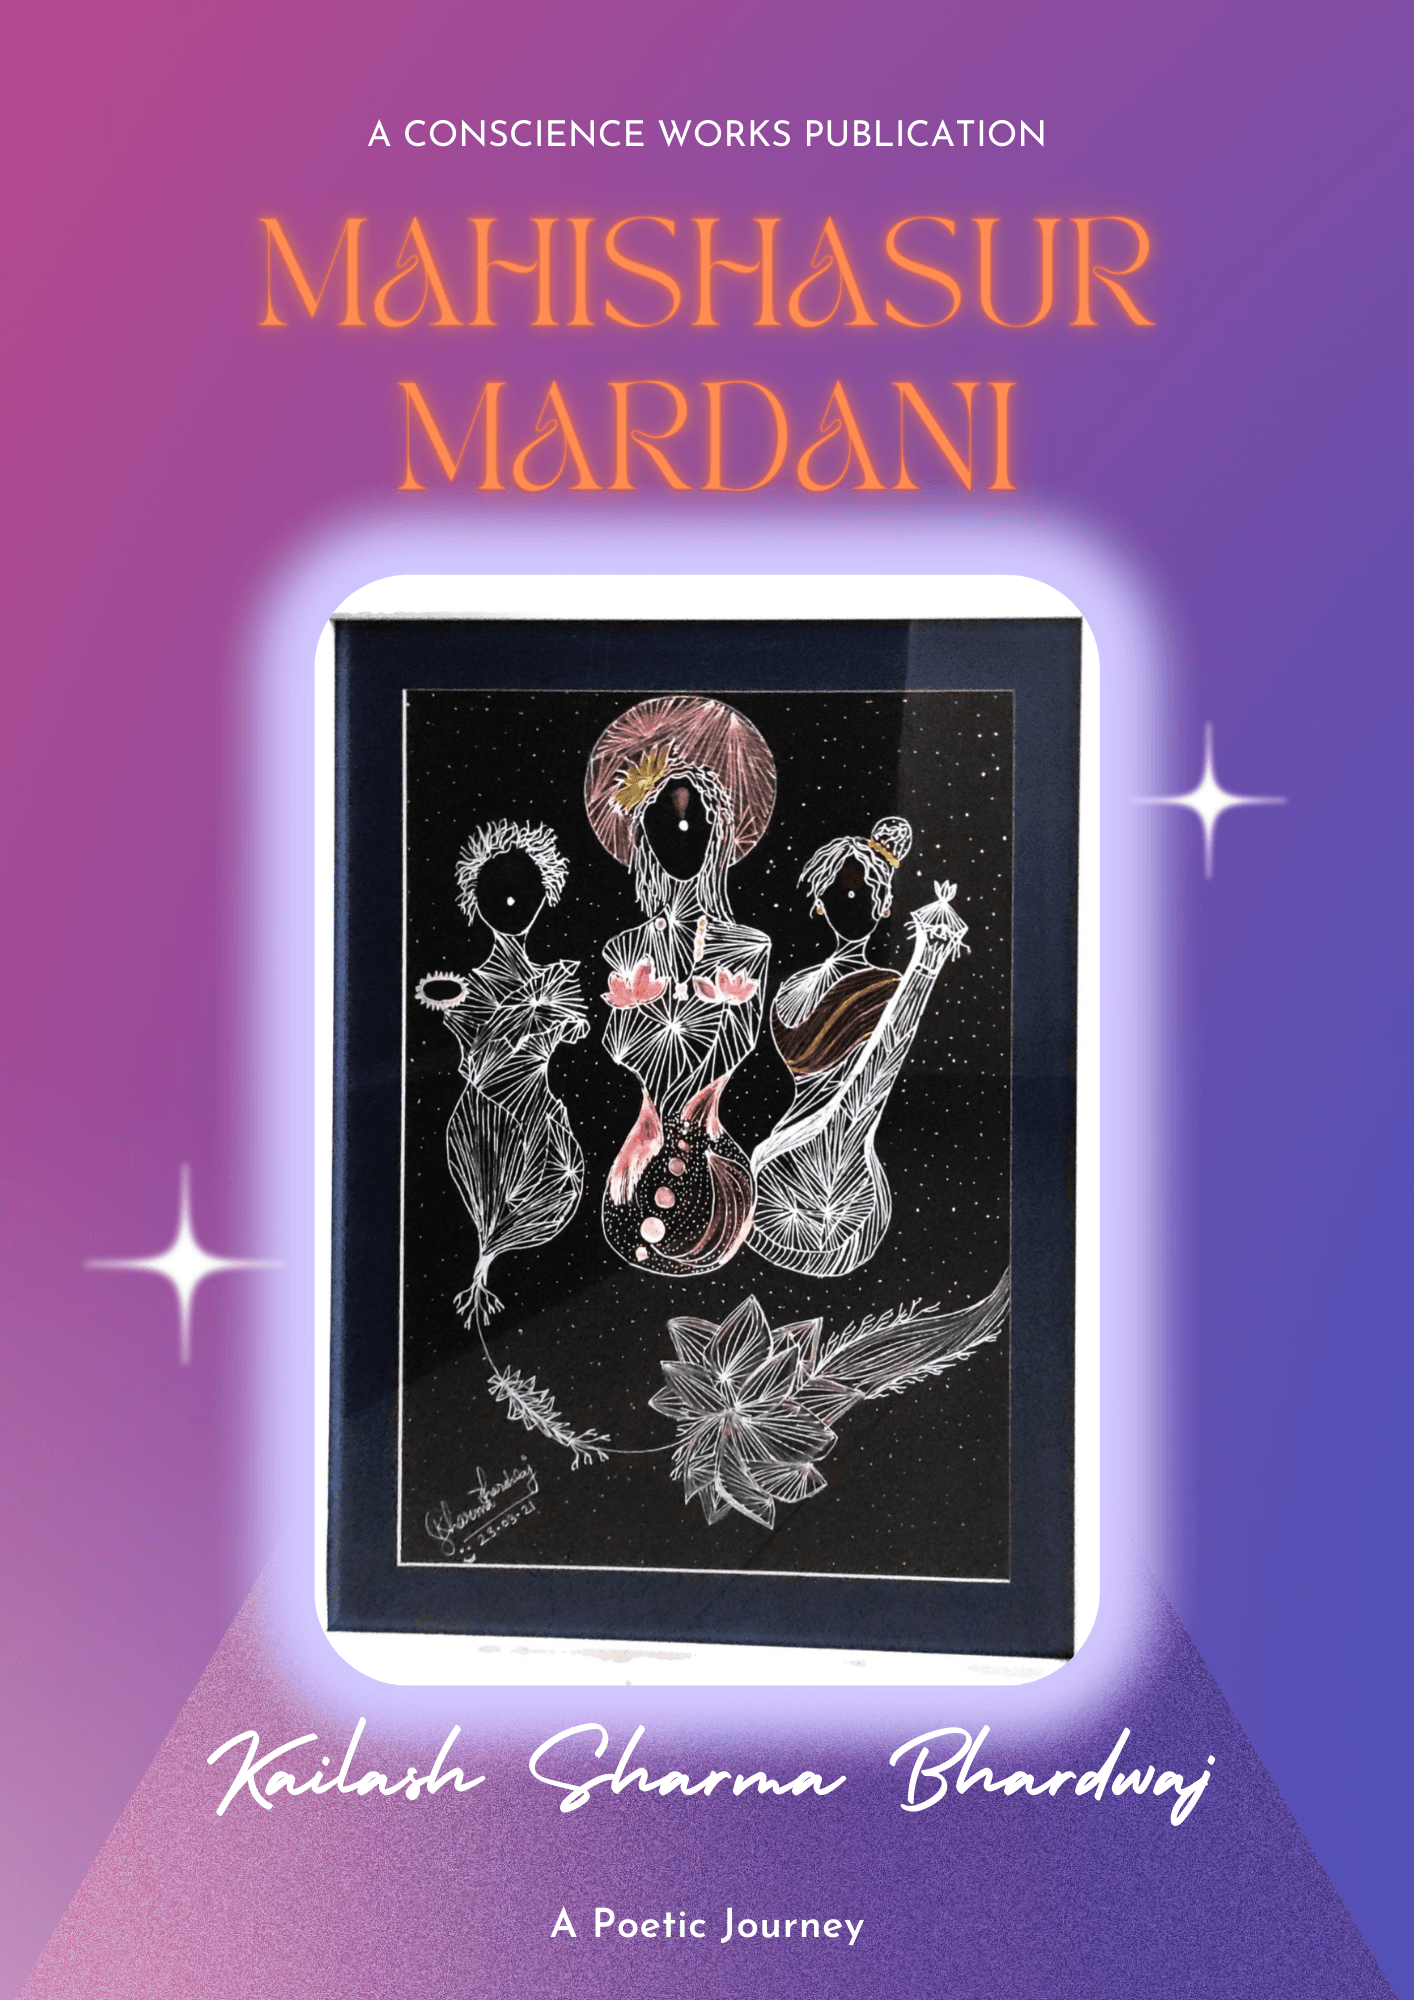 Mahishasura Mardini by Kailash Bhardwaj - CONSCIENCE WORKS